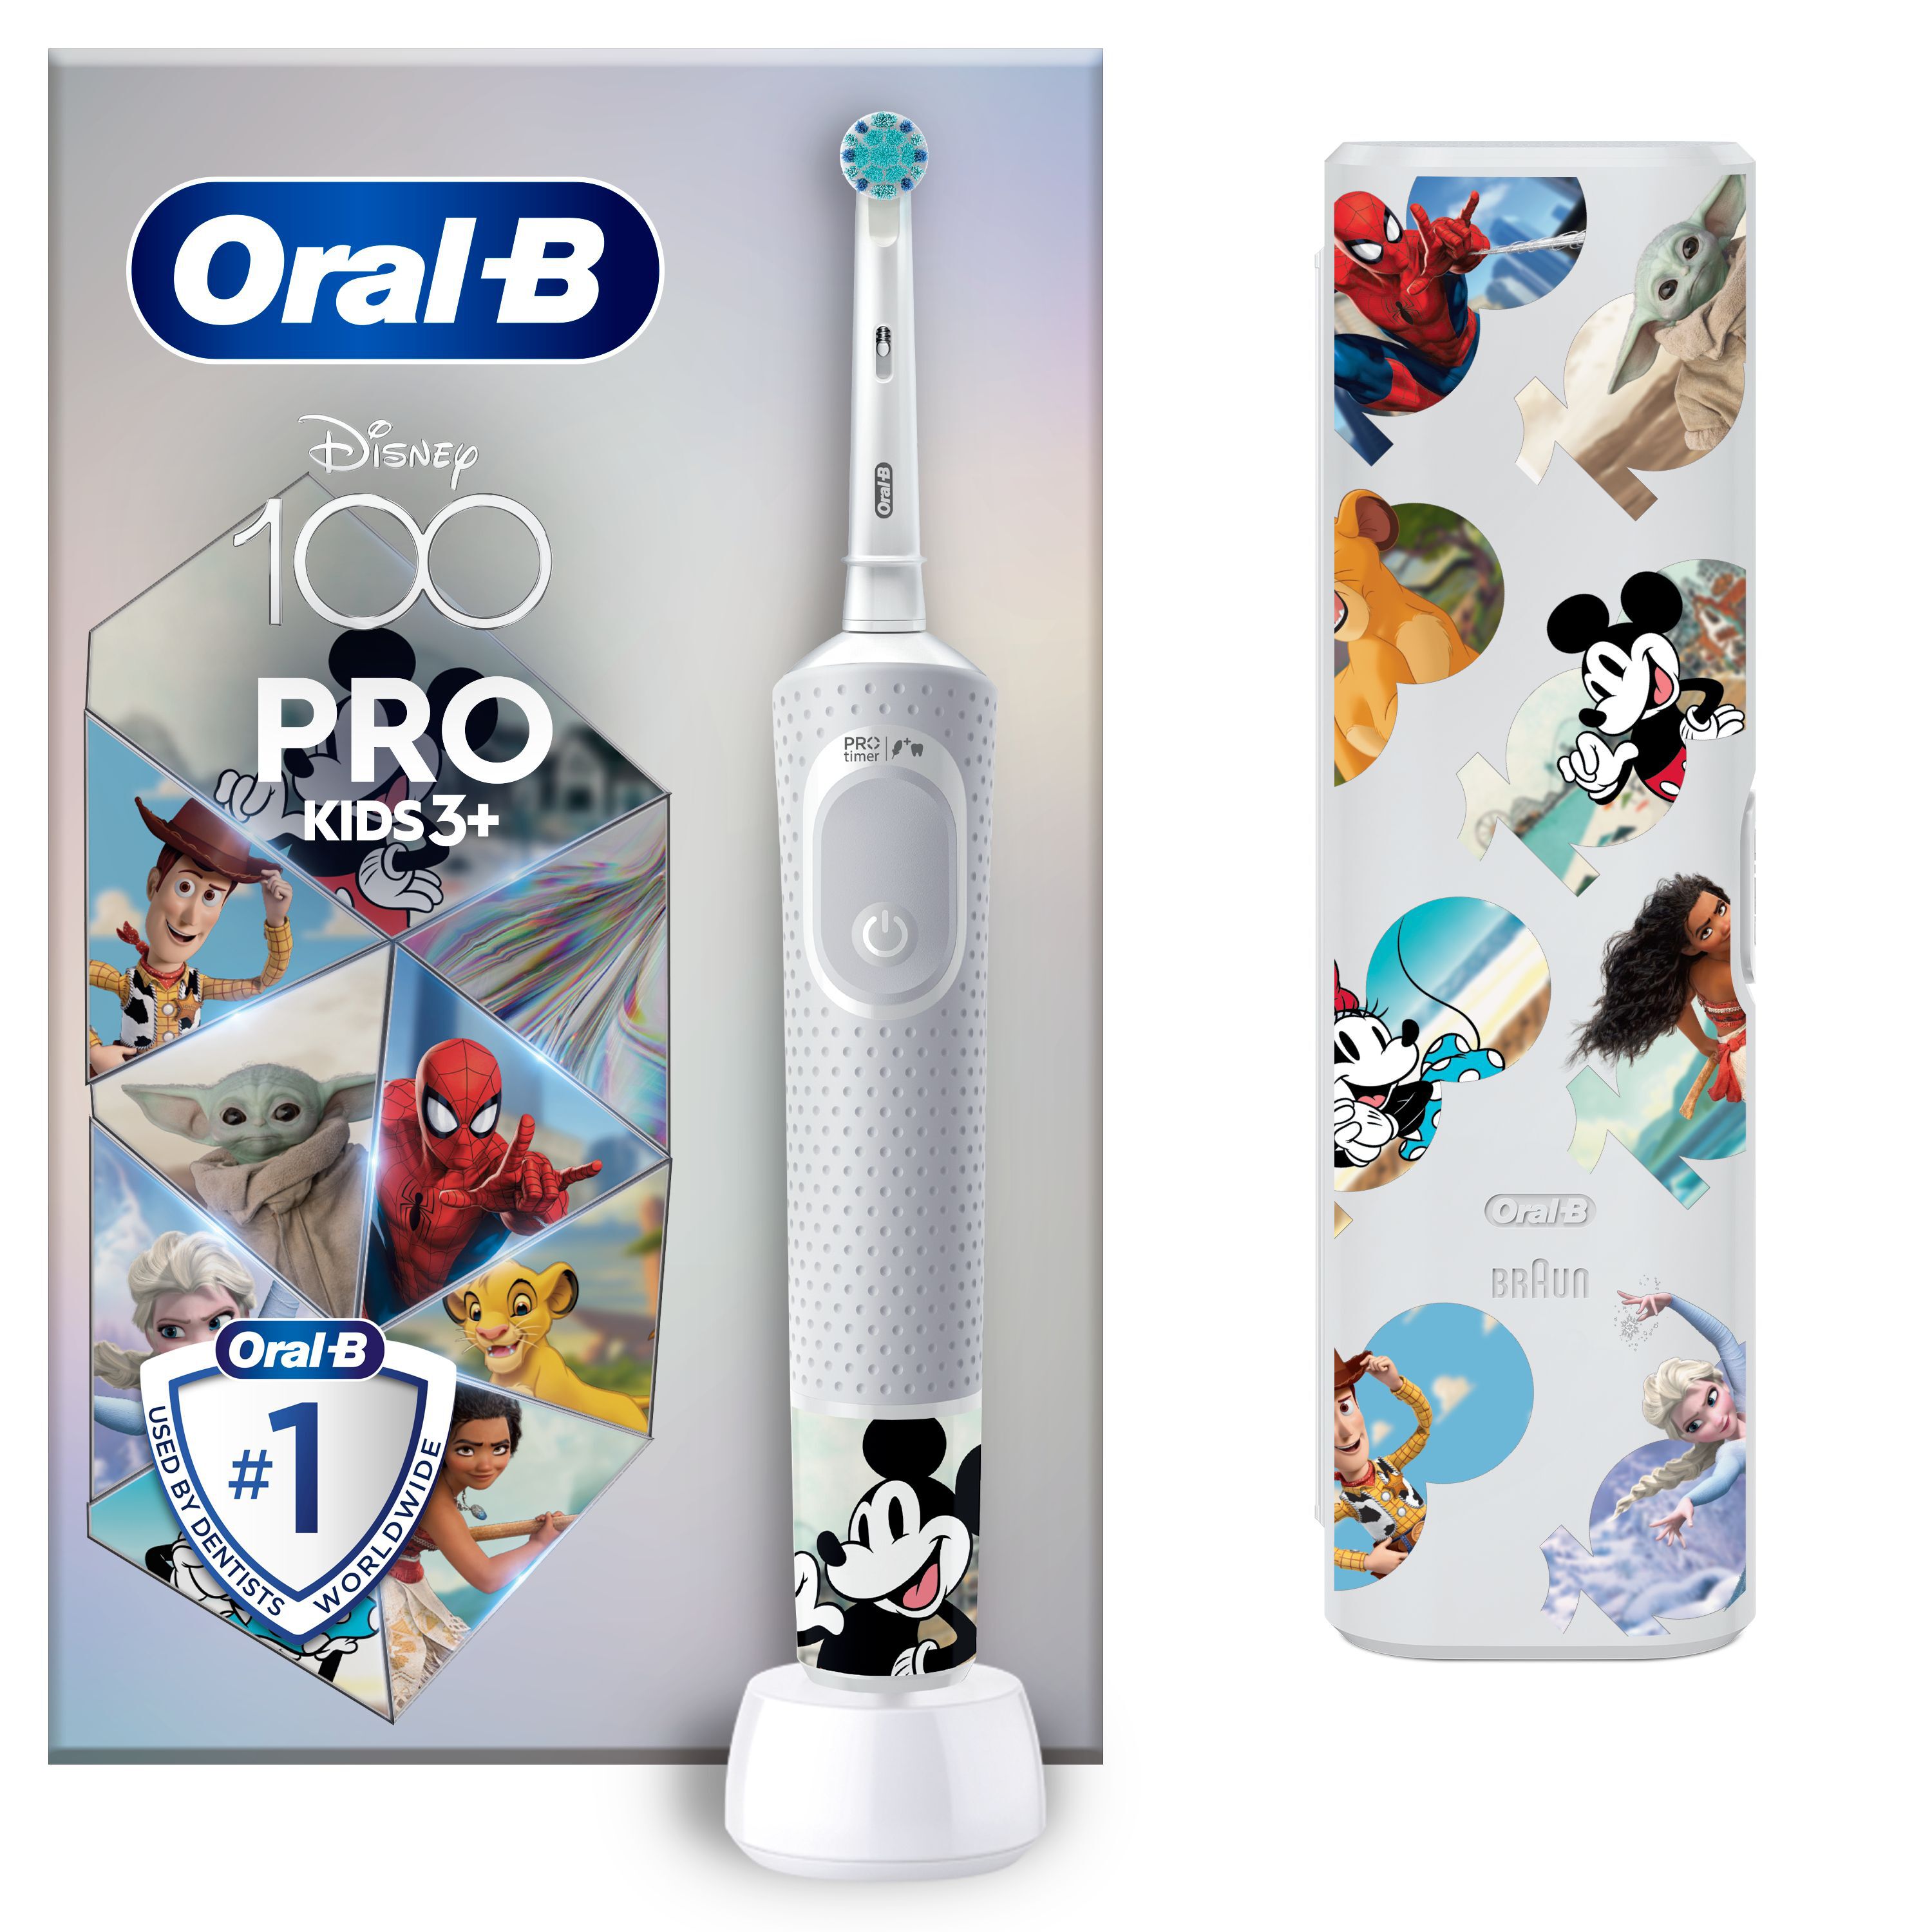 Oral-B Vitality PRO Kids Giftset - Disney 100 Years